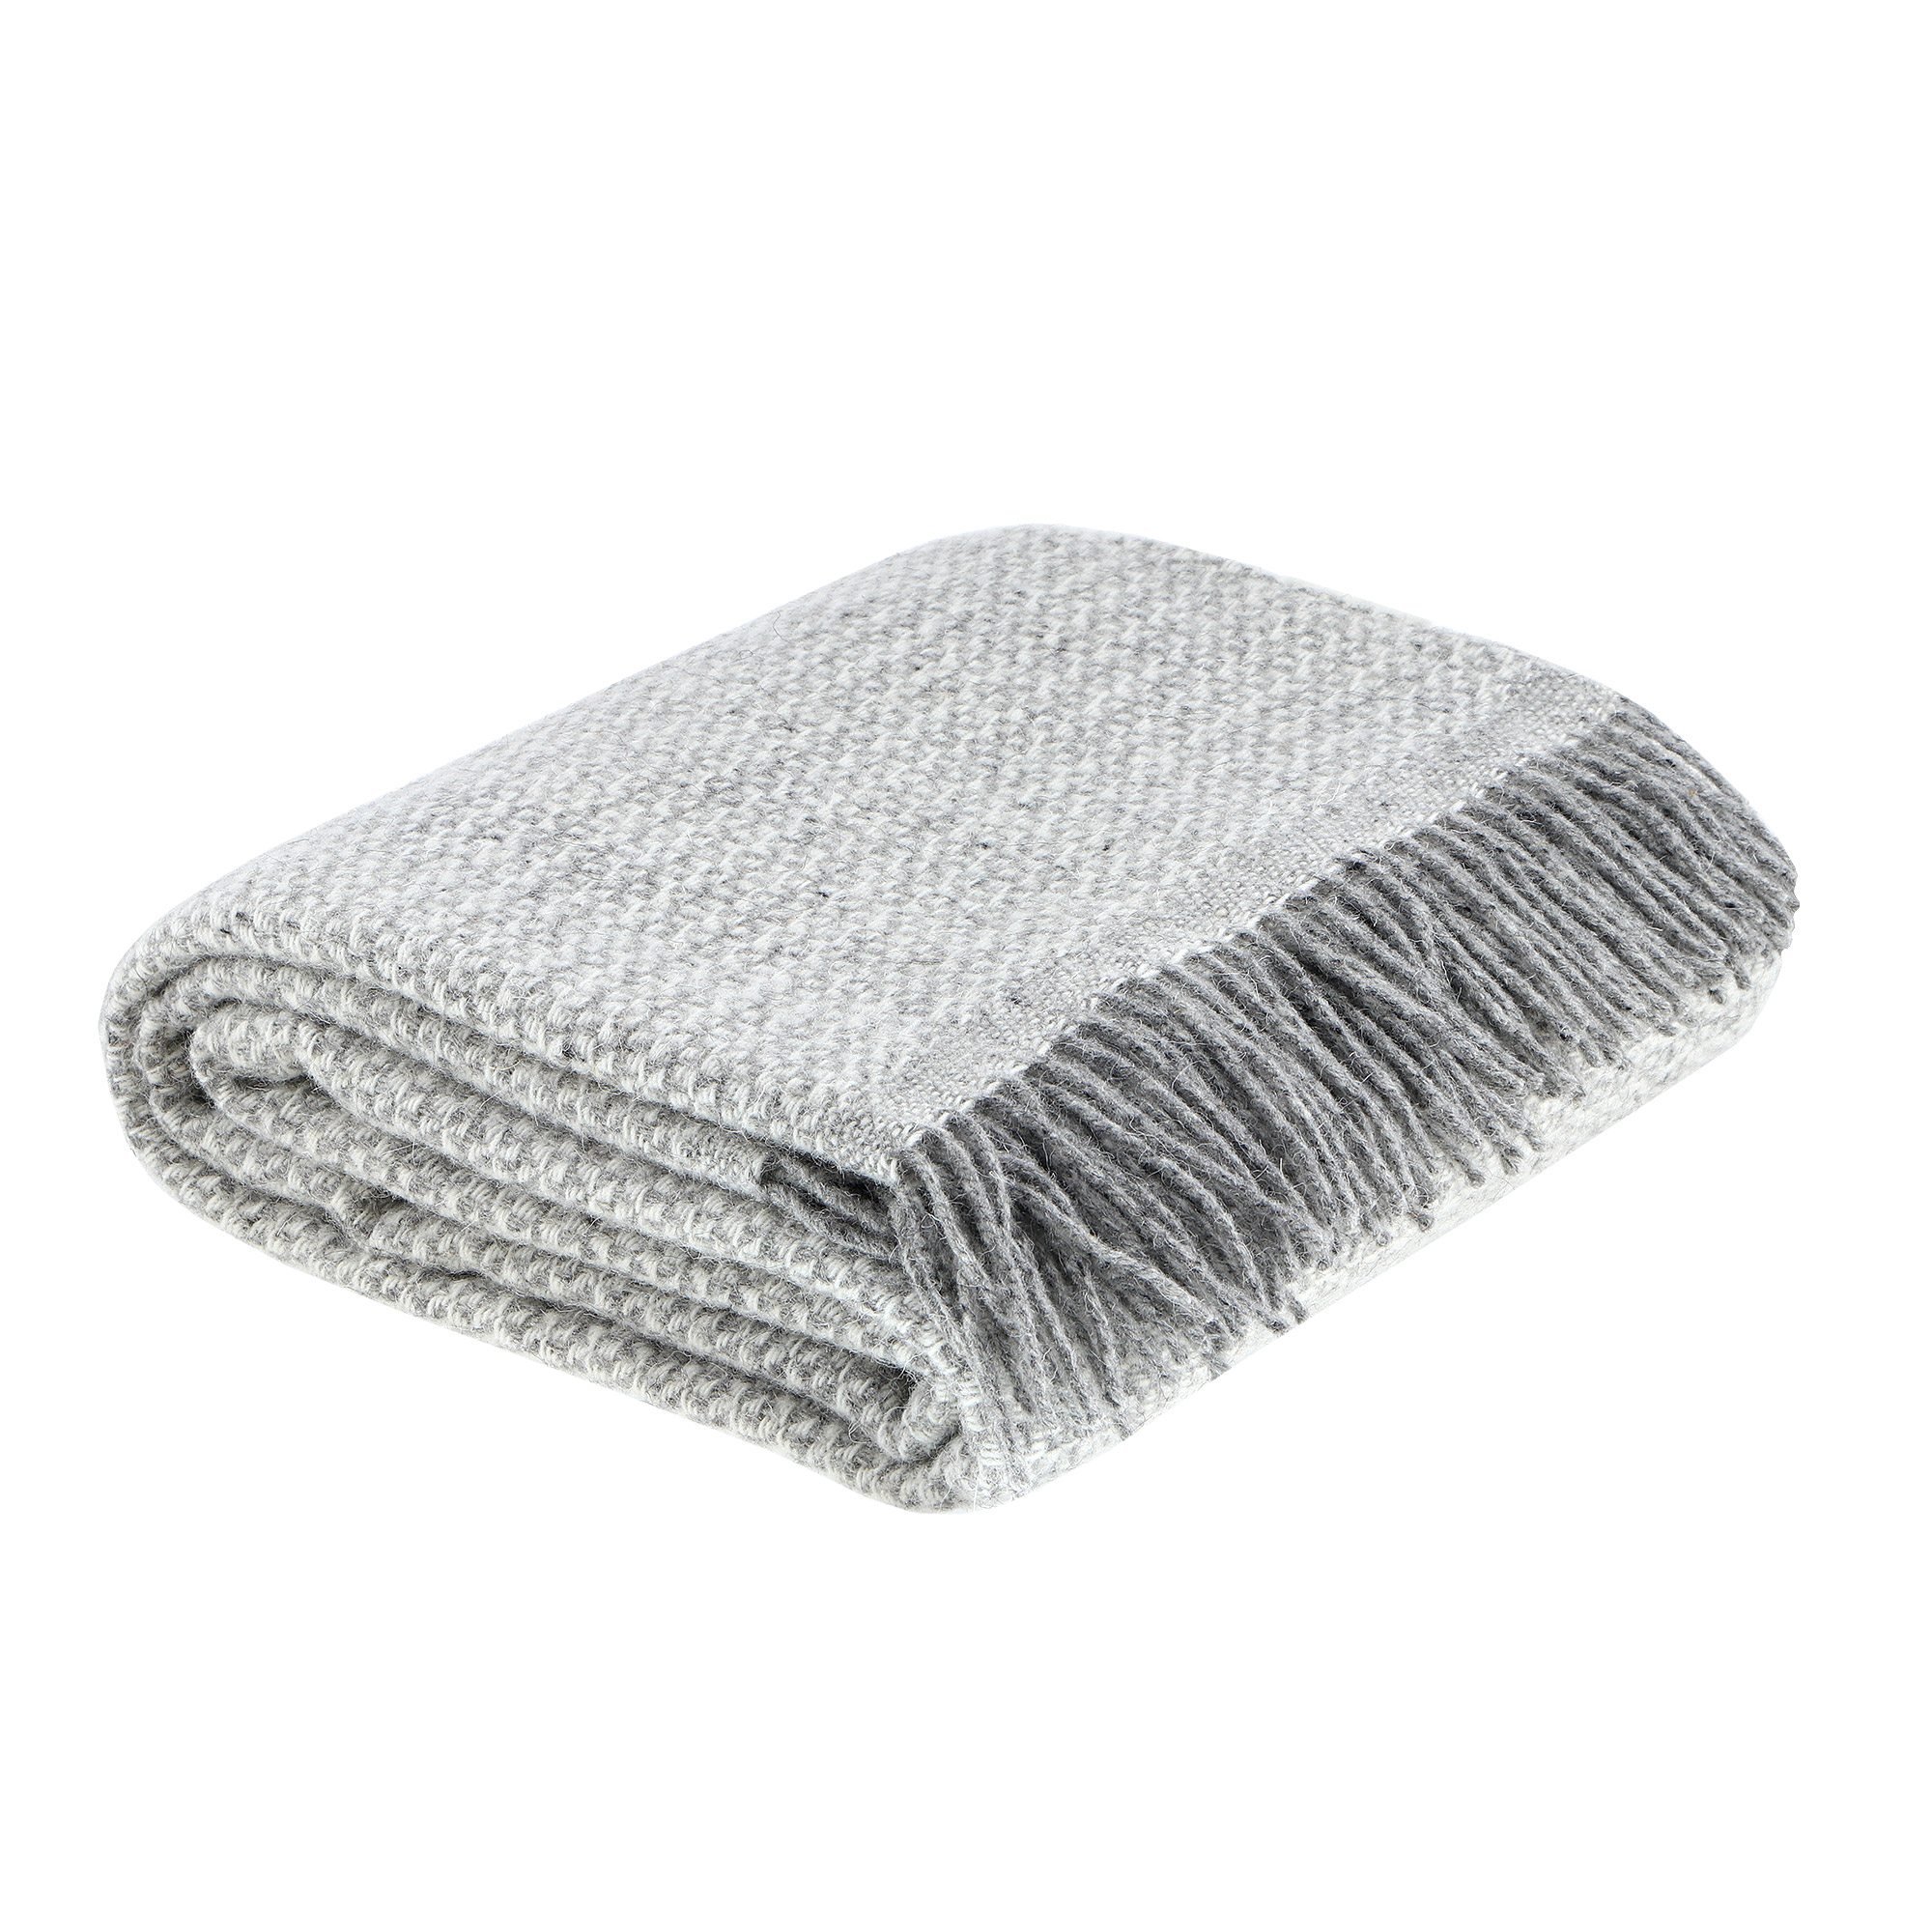 Плед Home blanket aldona 130х190 белый-серый - фото 1